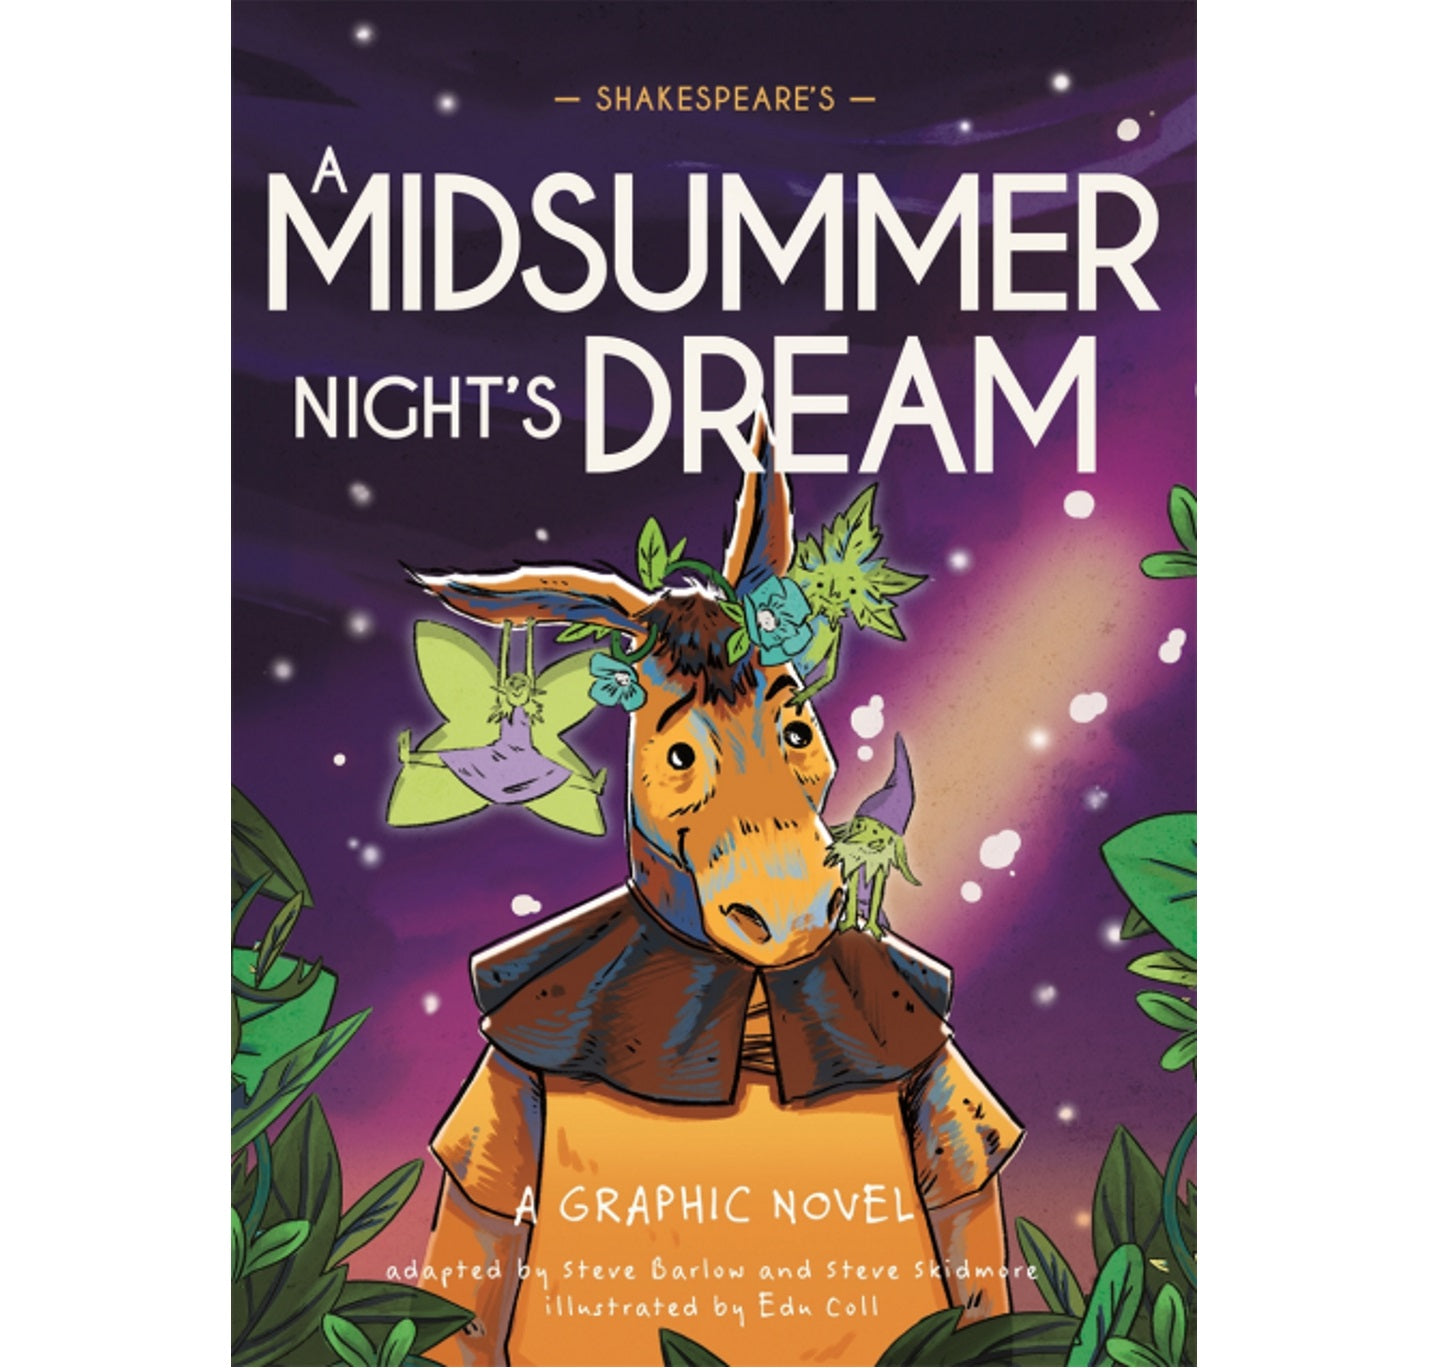 Shakespeare's A Midsummer Night's Dream: A Graphic Novel – The RSC shop